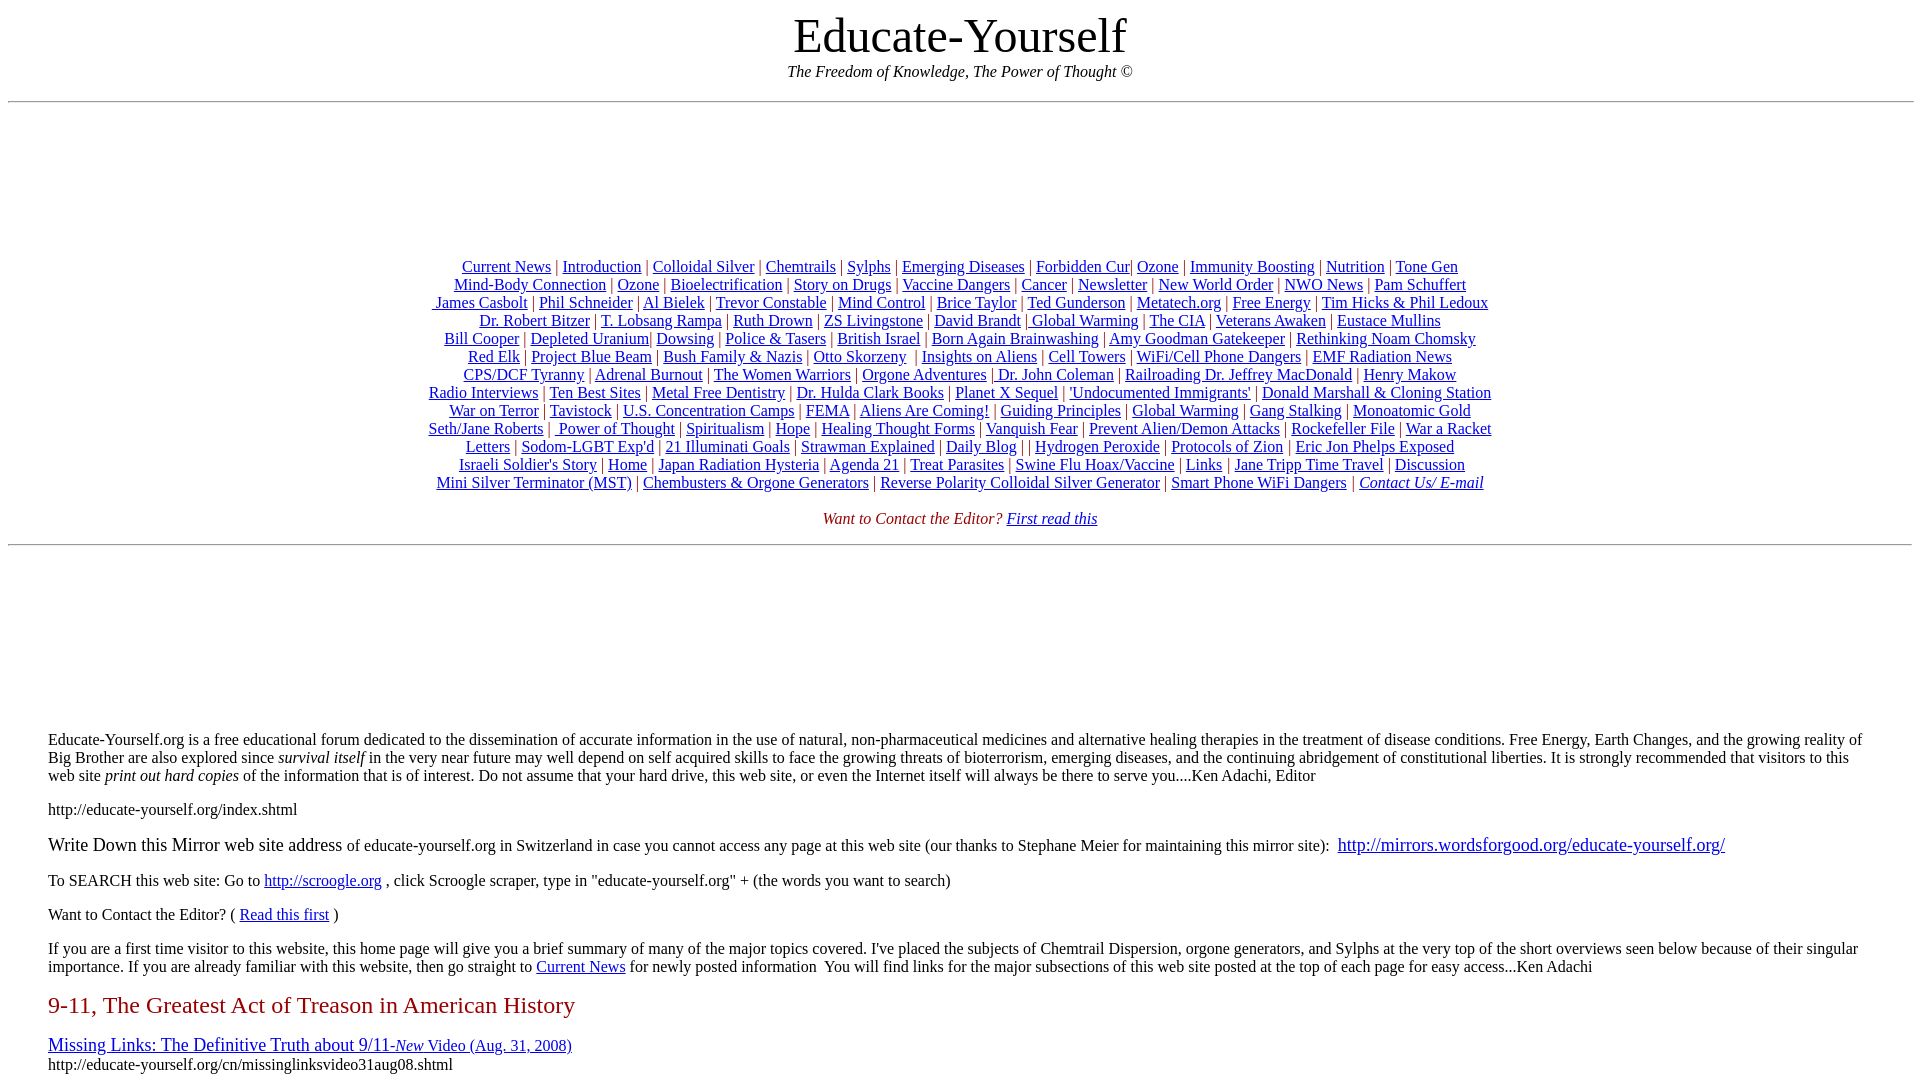 Status do site educate-yourself.org está   ONLINE